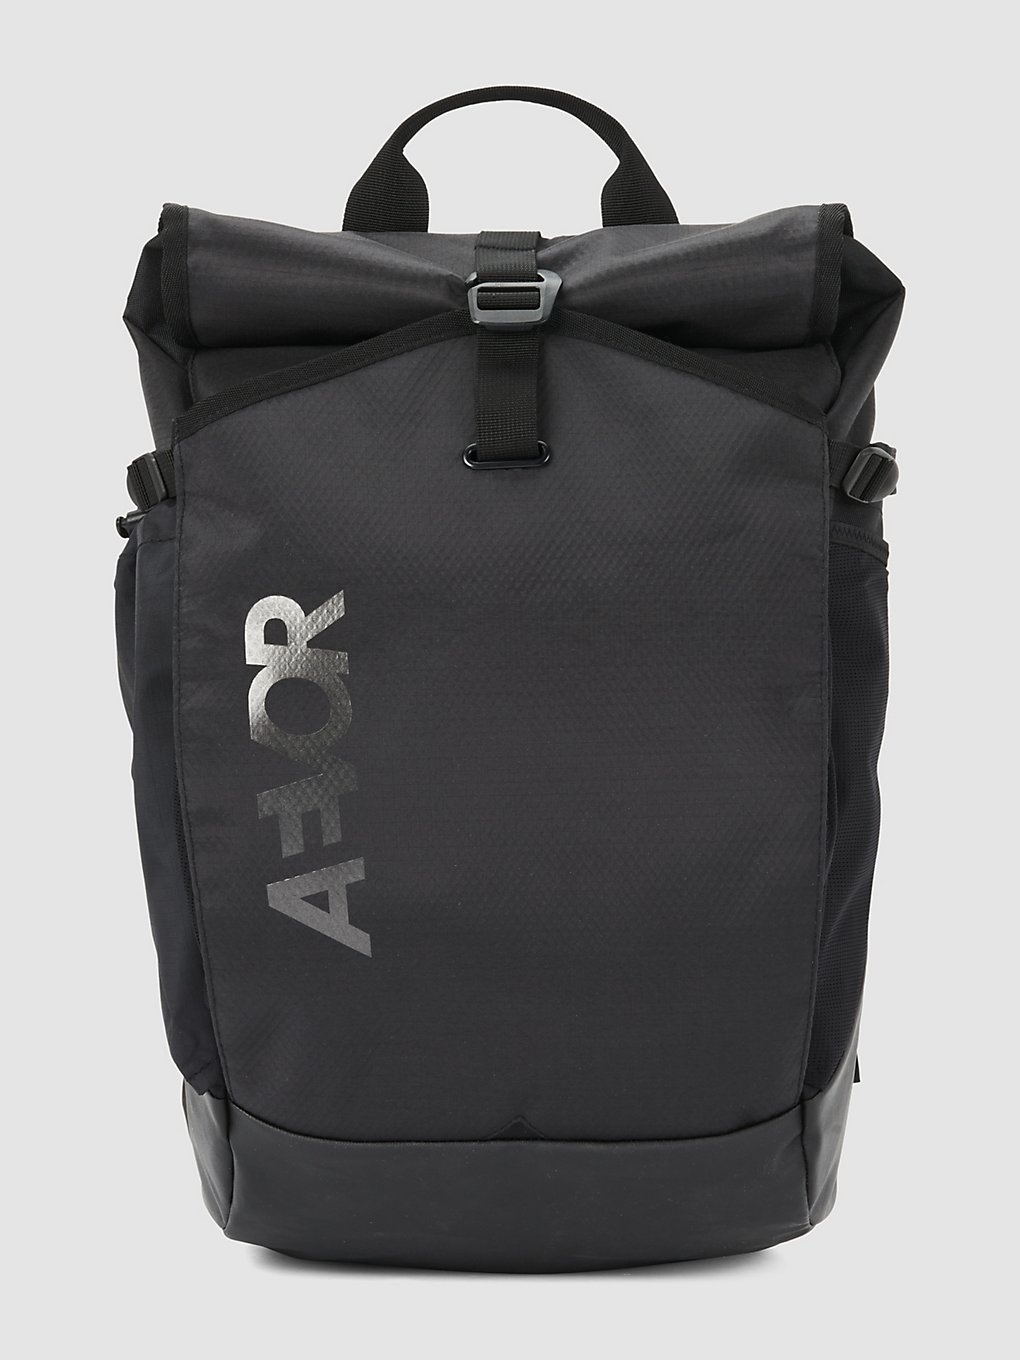 AEVOR Roll Pack Rucksack proof black kaufen